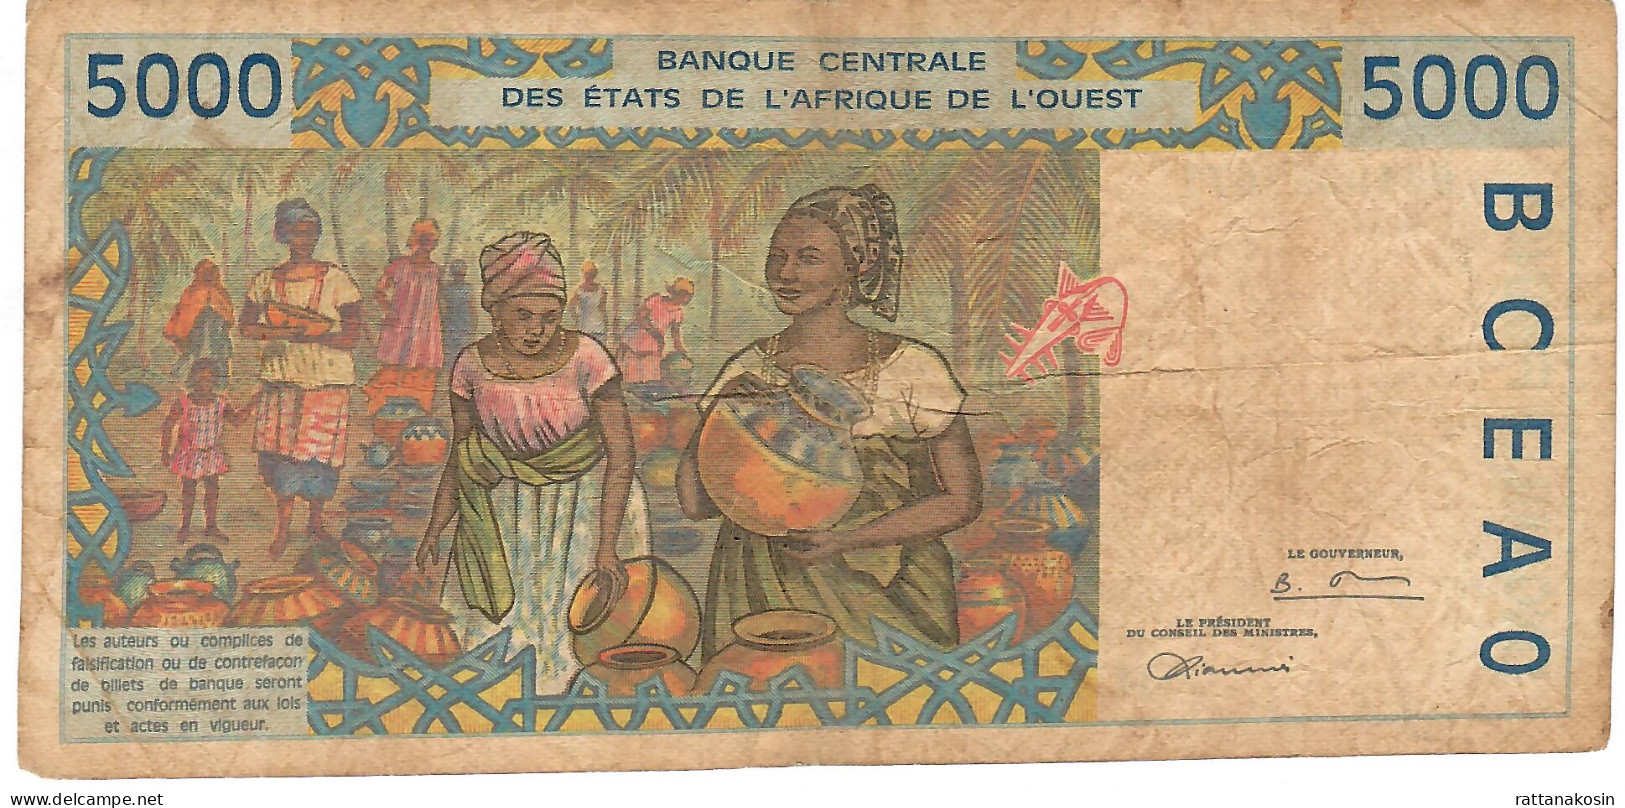 W.A.S. NIGER    P613Hd 5000 FRANCS (19)96 1996  Signature 28  FINE - Westafrikanischer Staaten